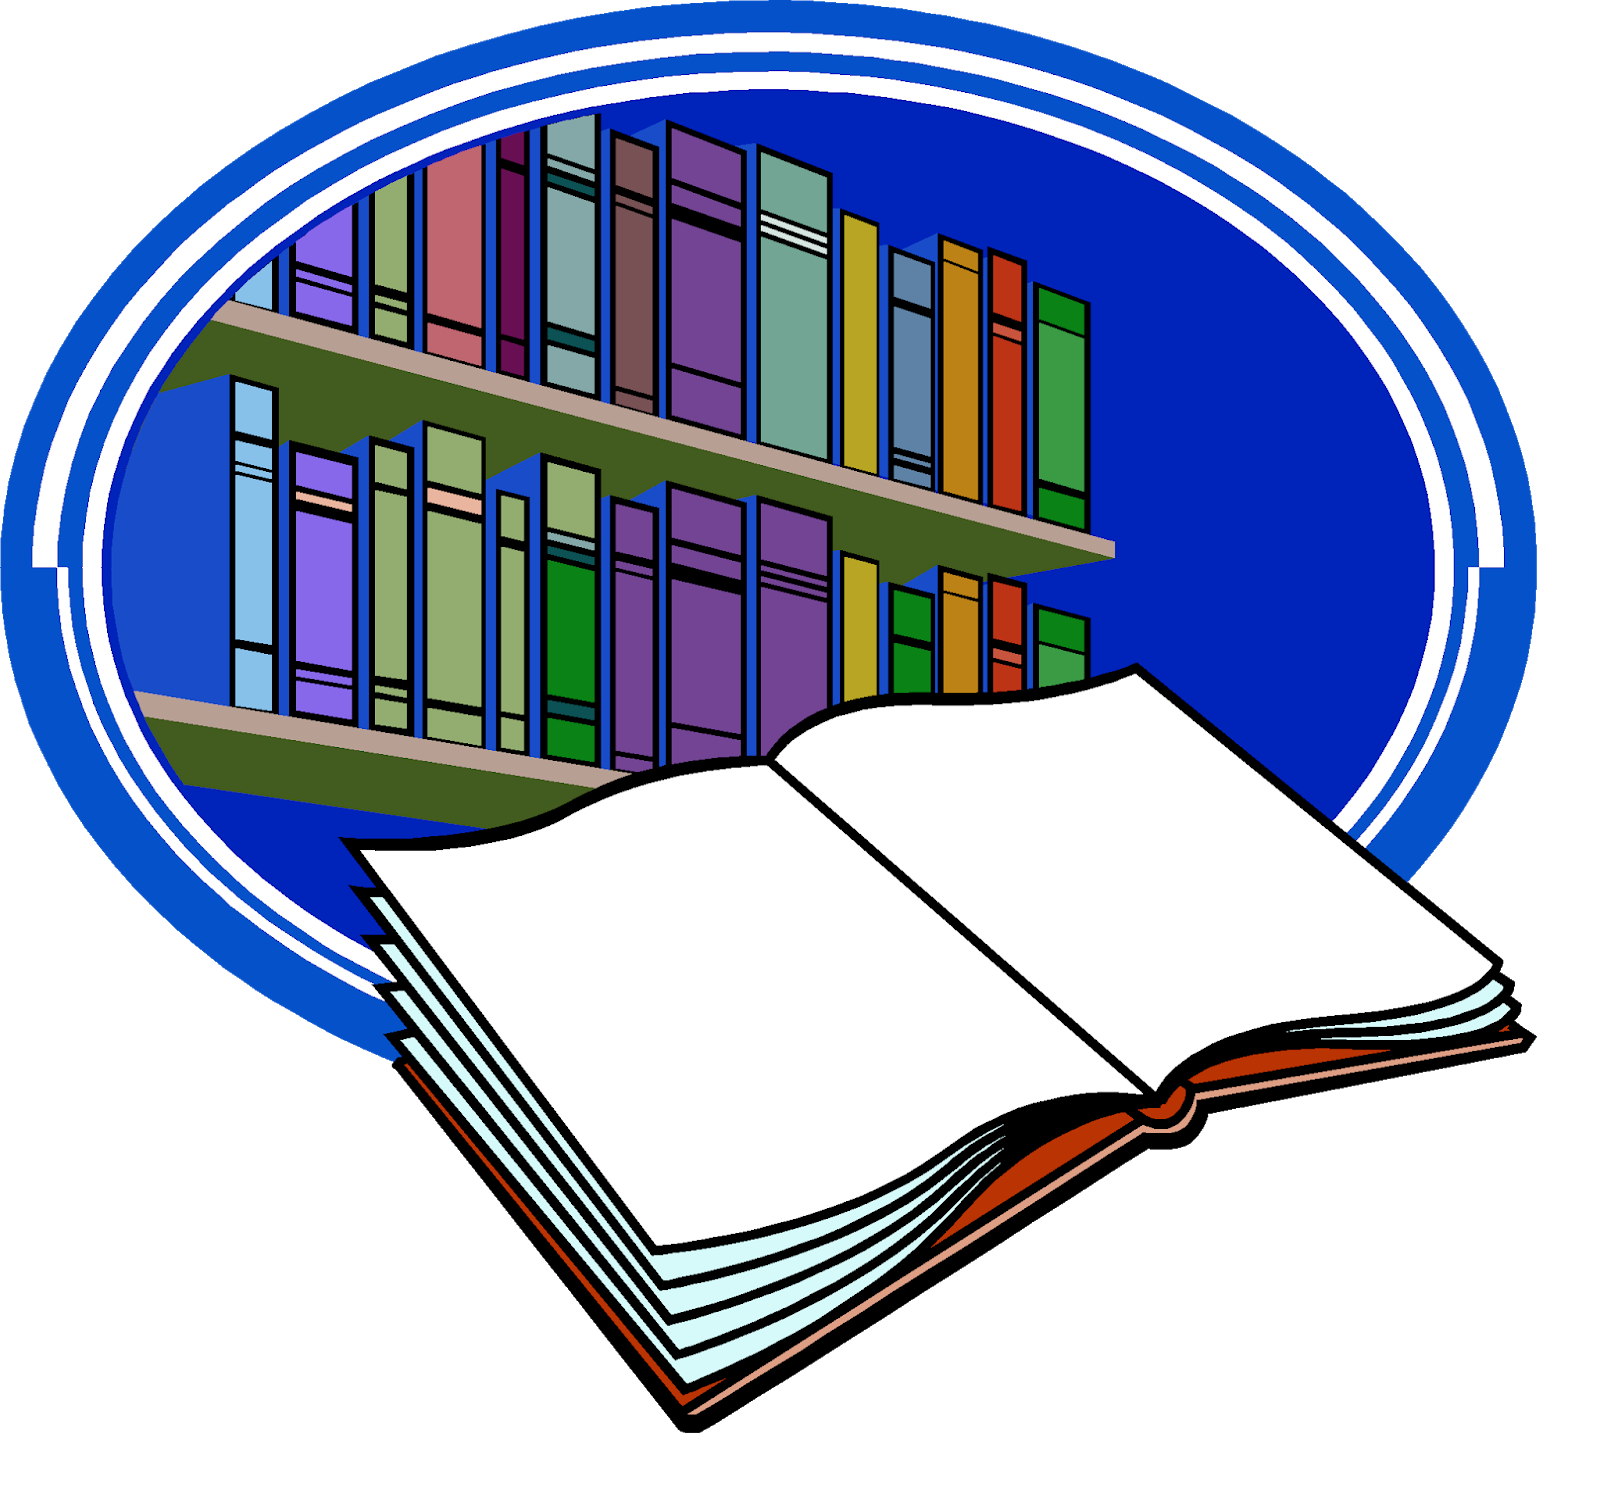 Логотип библиотеки. Библиотека картинки. Библиотека иллюстрация. Логотип школьной библиотеки.